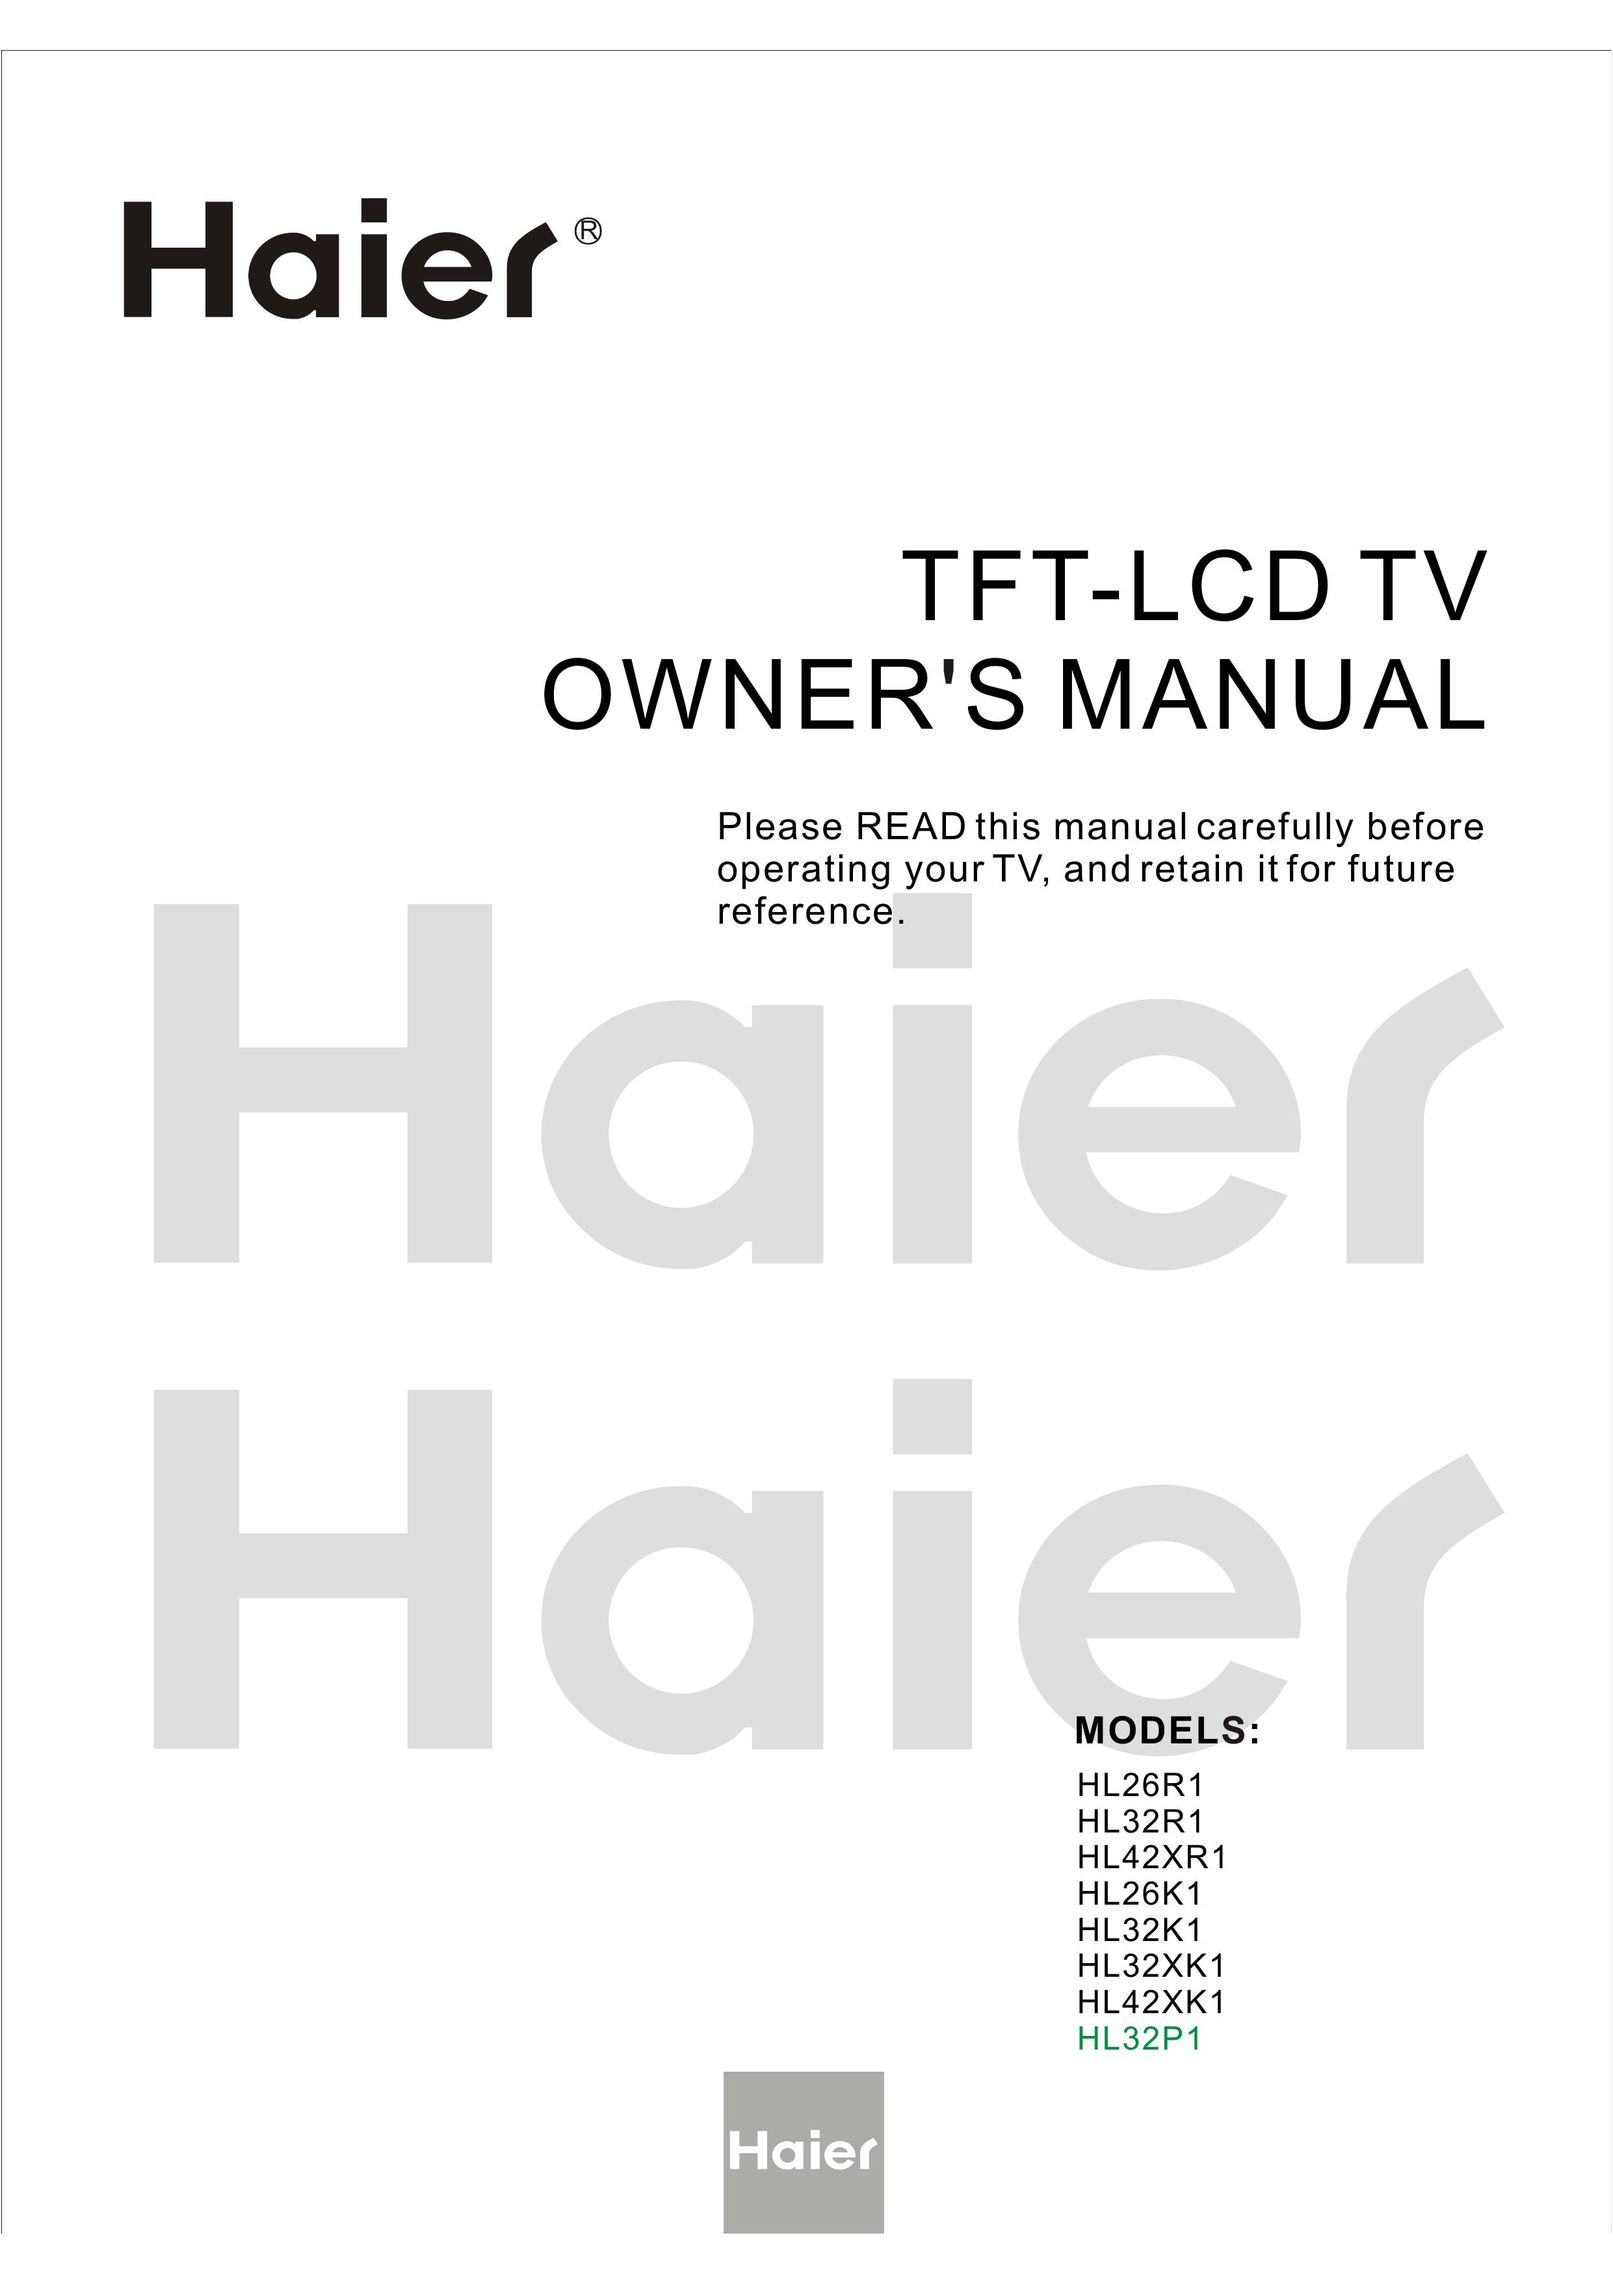 Haier HL26K1 Flat Panel Television User Manual